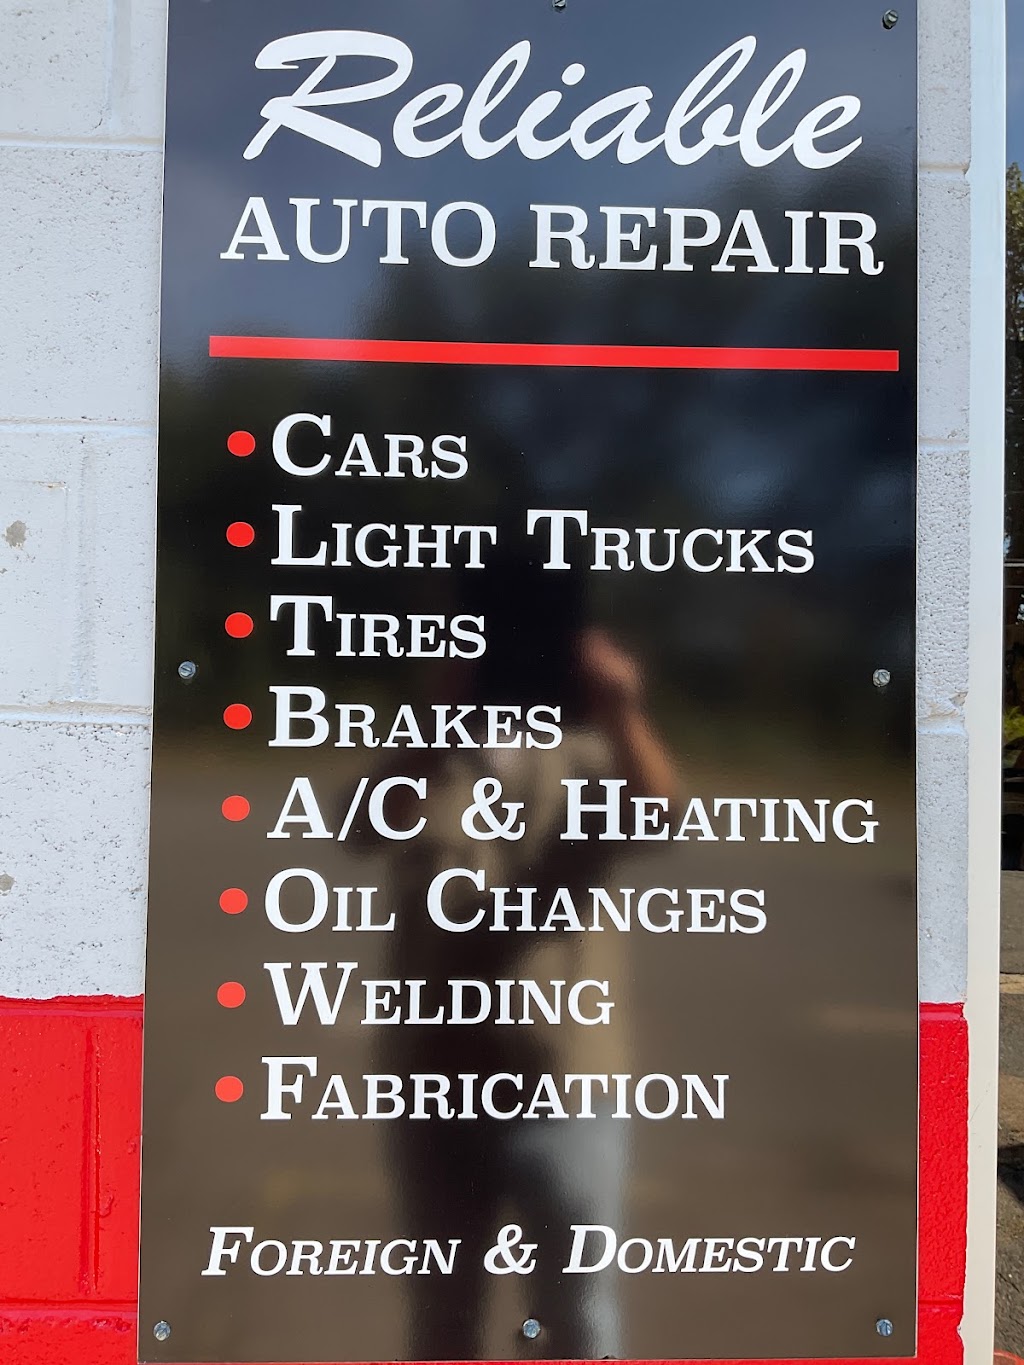 Reliable Auto Repair | 222 Trenton Rd, Browns Mills, NJ 08015 | Phone: (609) 248-5189